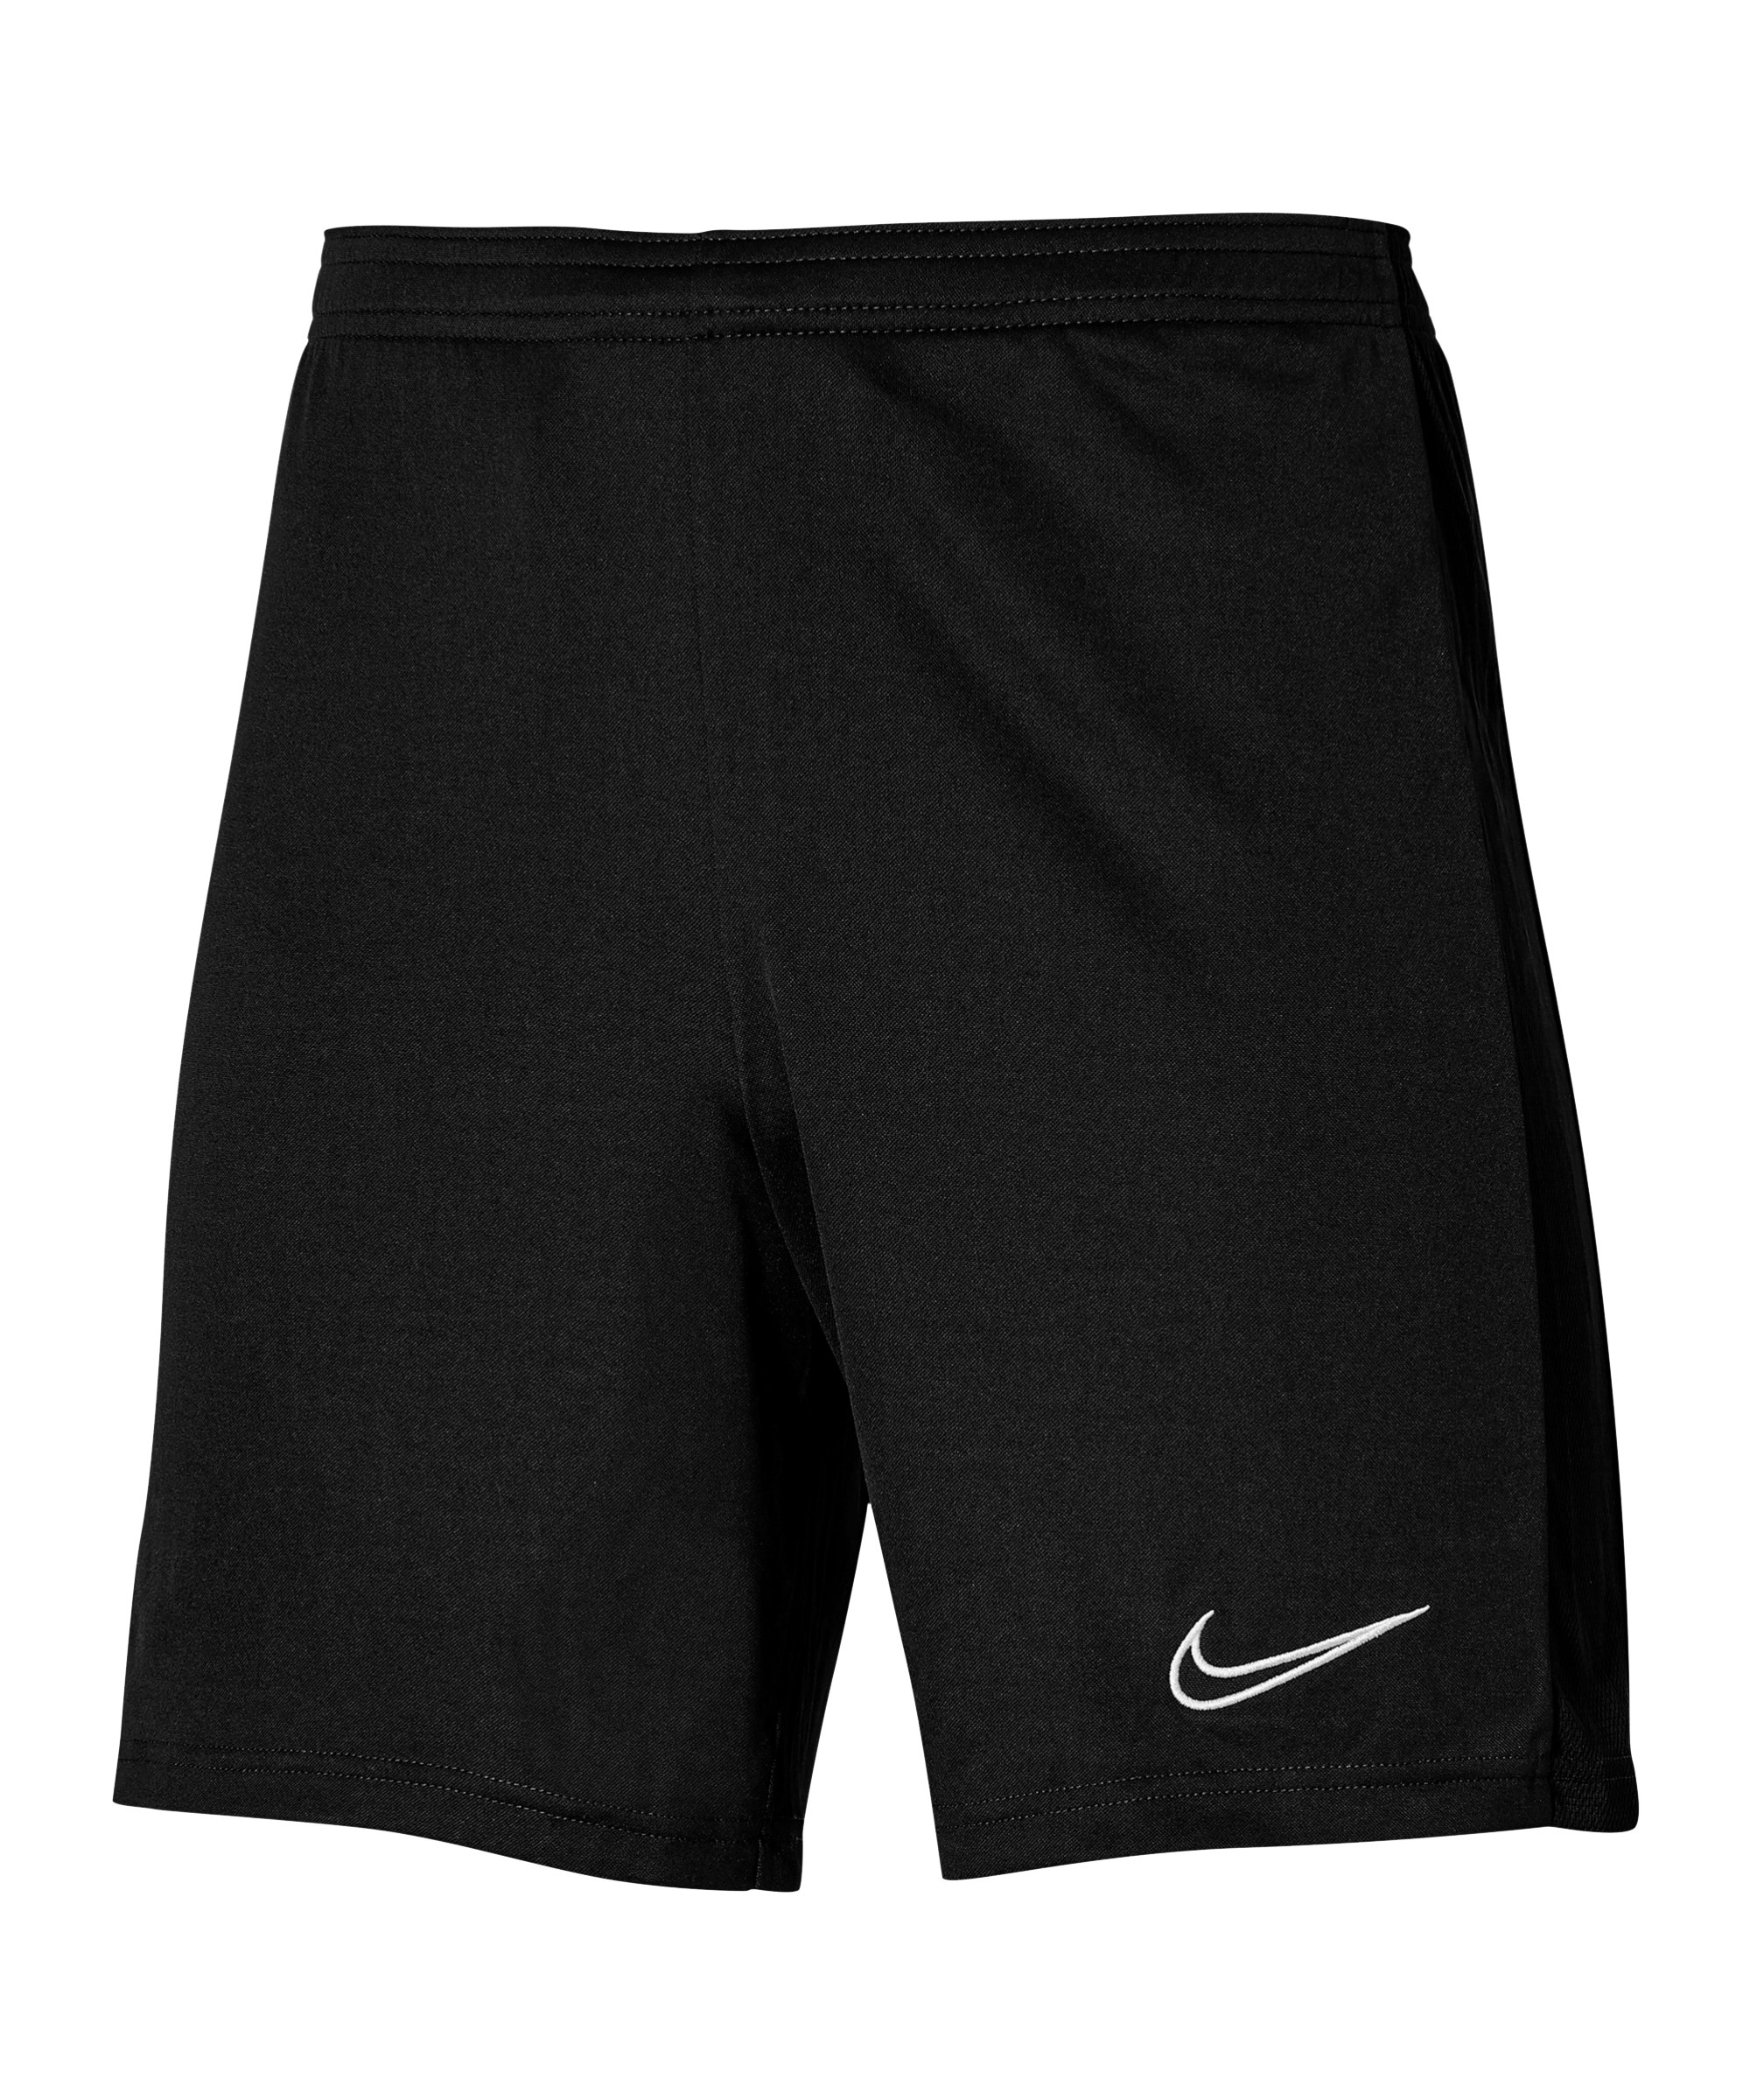 Nike Academy Training Short Schwarz F010 - schwarz